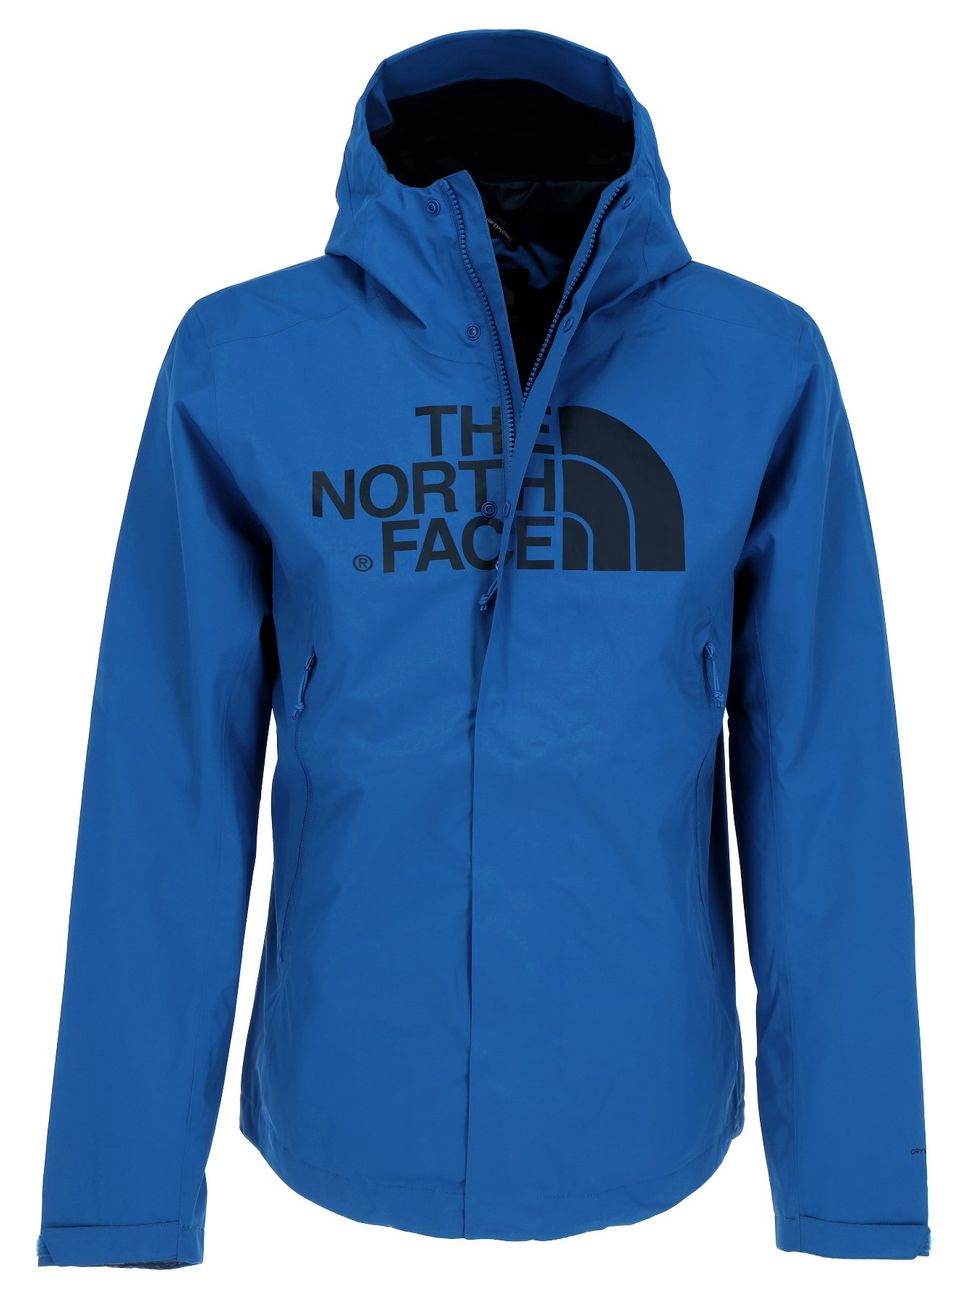 The North Face Herren Regenjacke Drew Peak Jacket - The North Face - SAGATOO - 190541079471